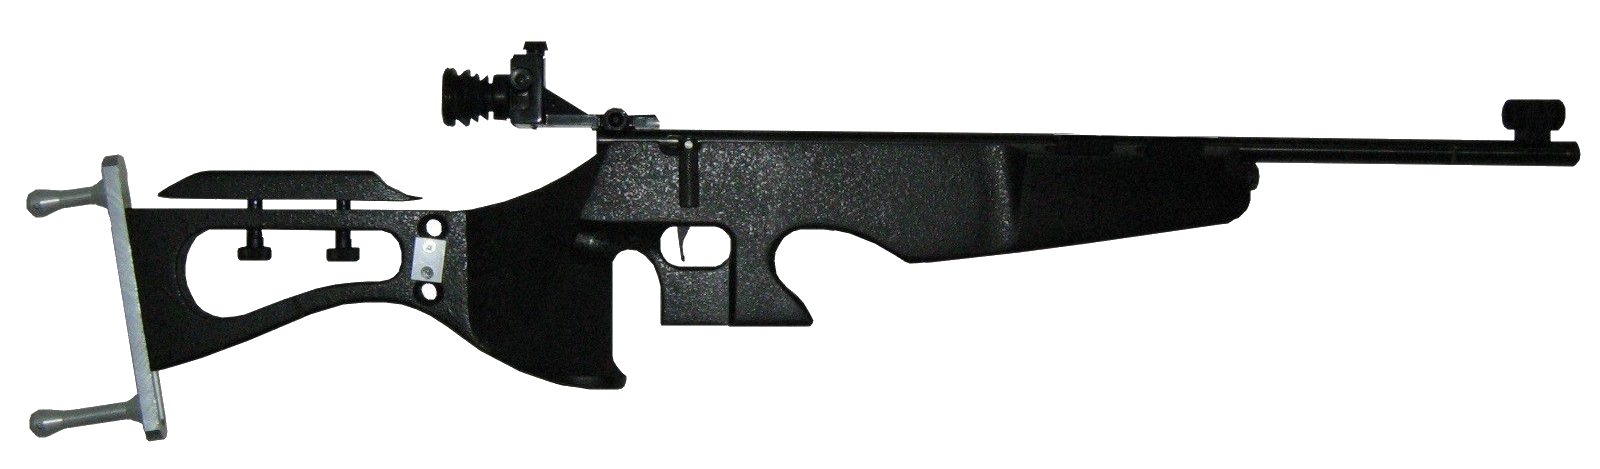 Laser rifle E-gun 223 - 